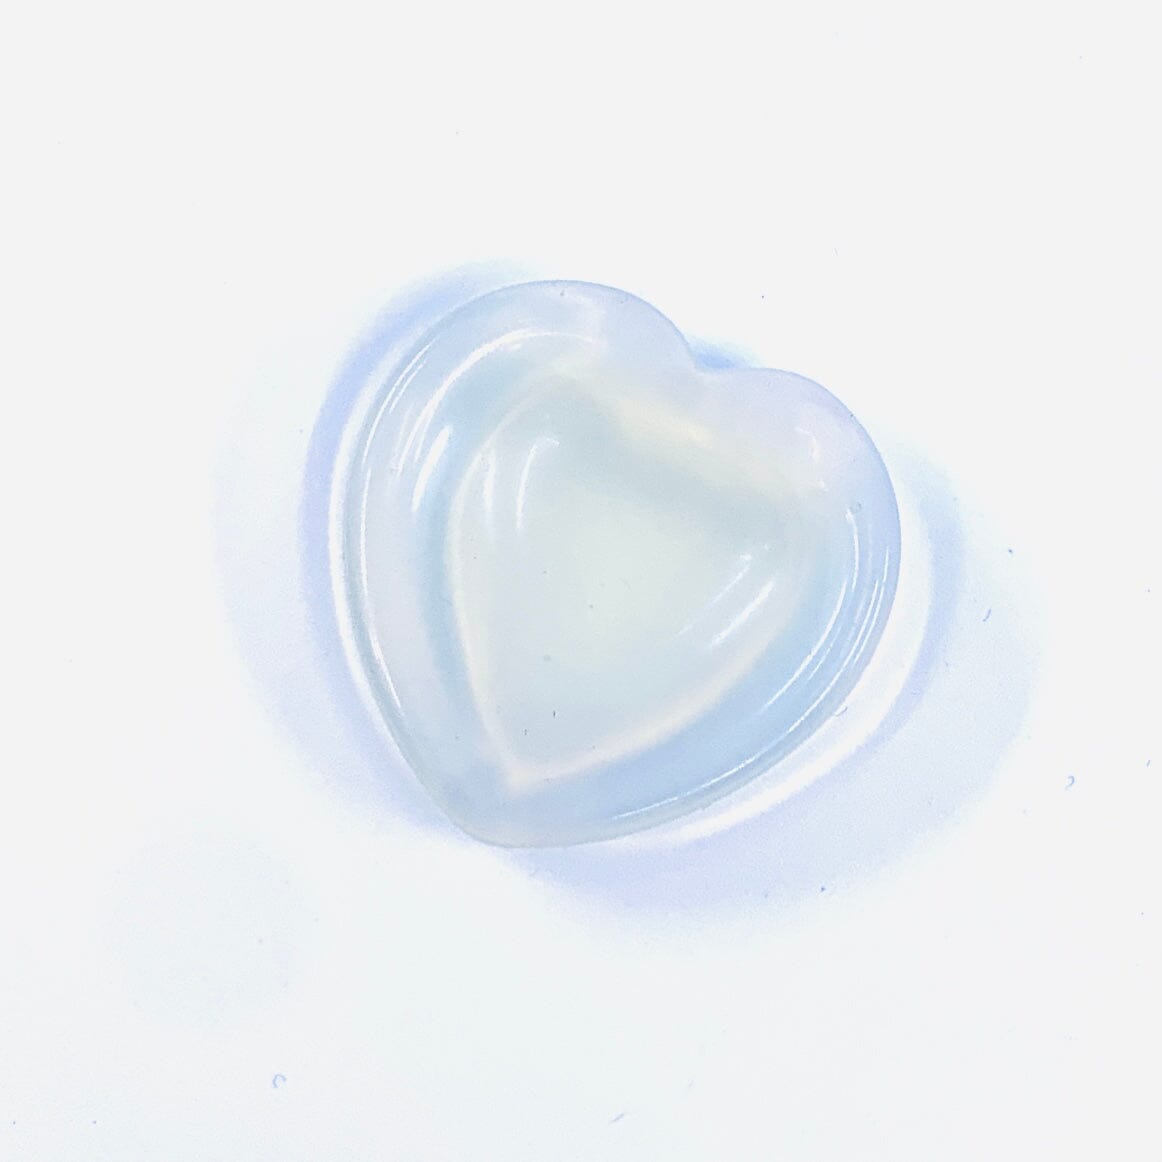 Small Heart Worry Stone - Opalite Decor - 